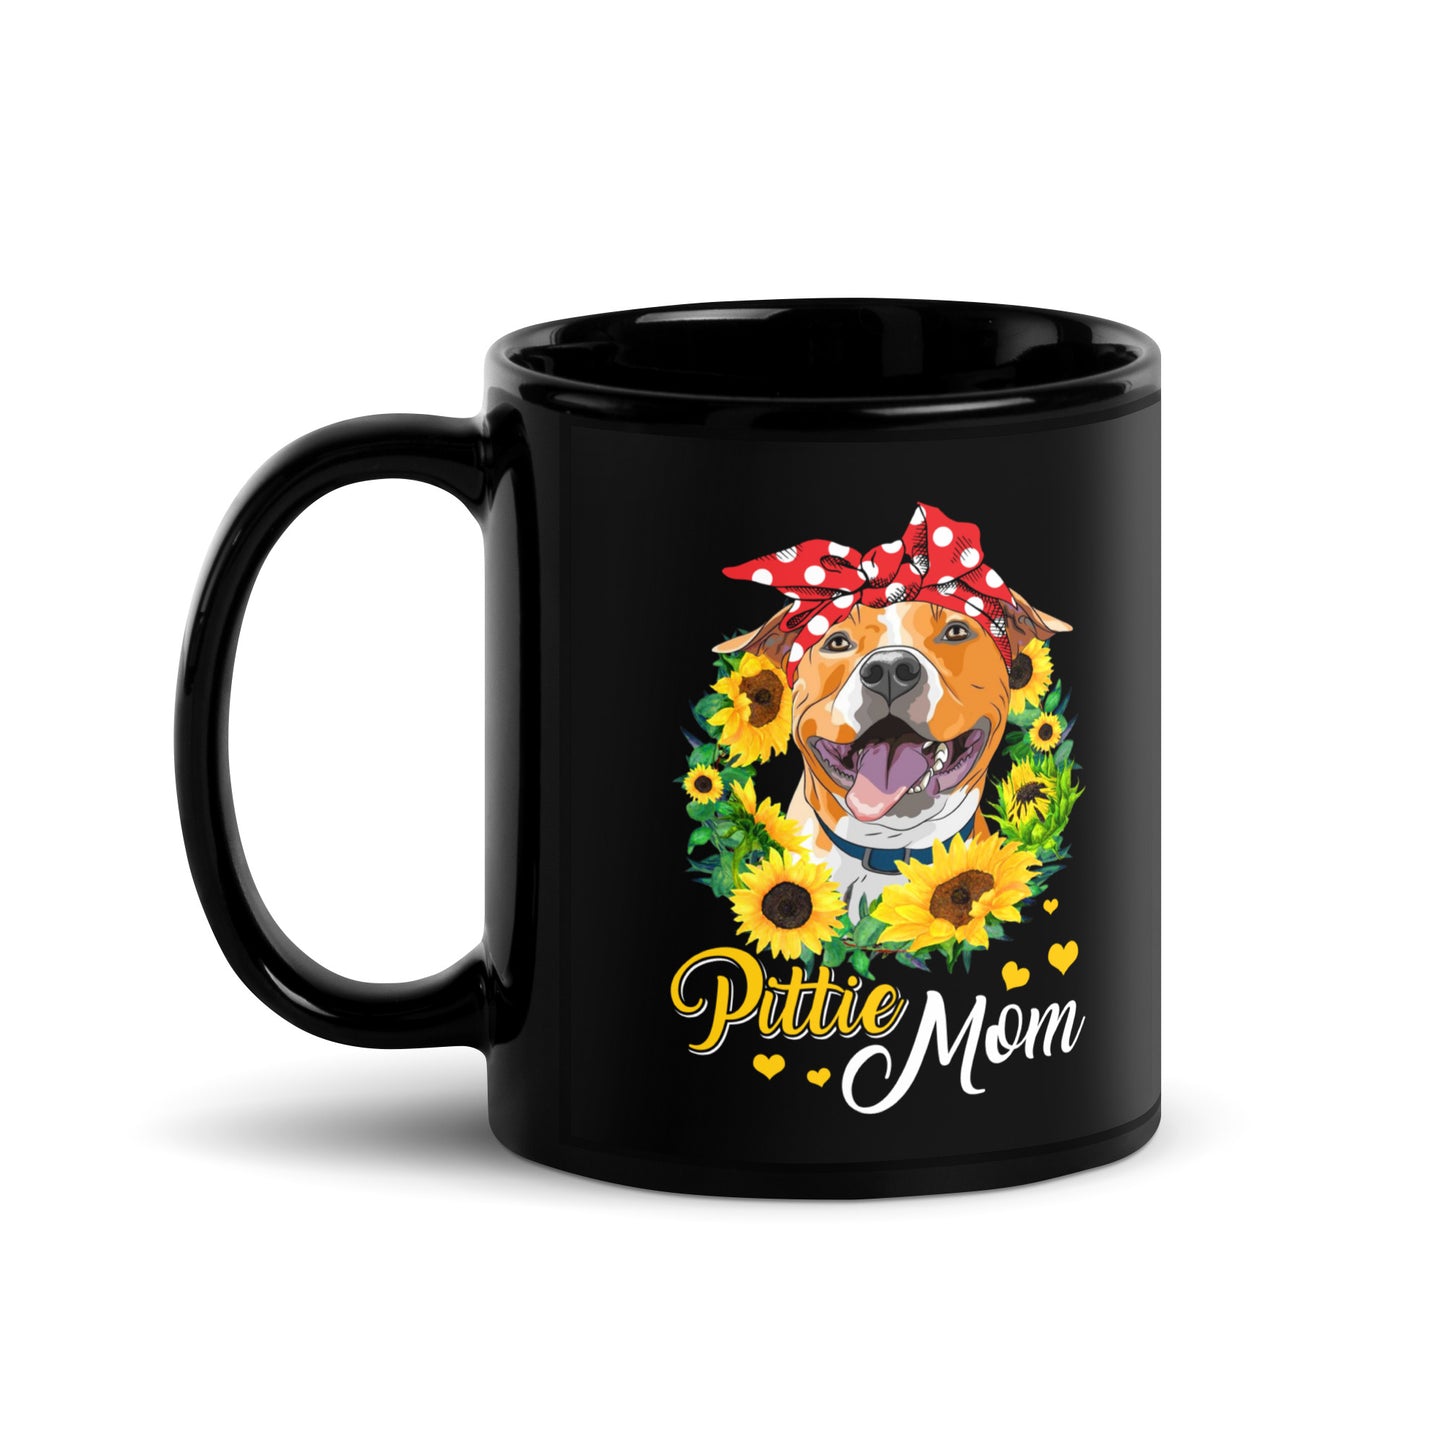 Pittie Mom - Pitbull Dog Mom Mug